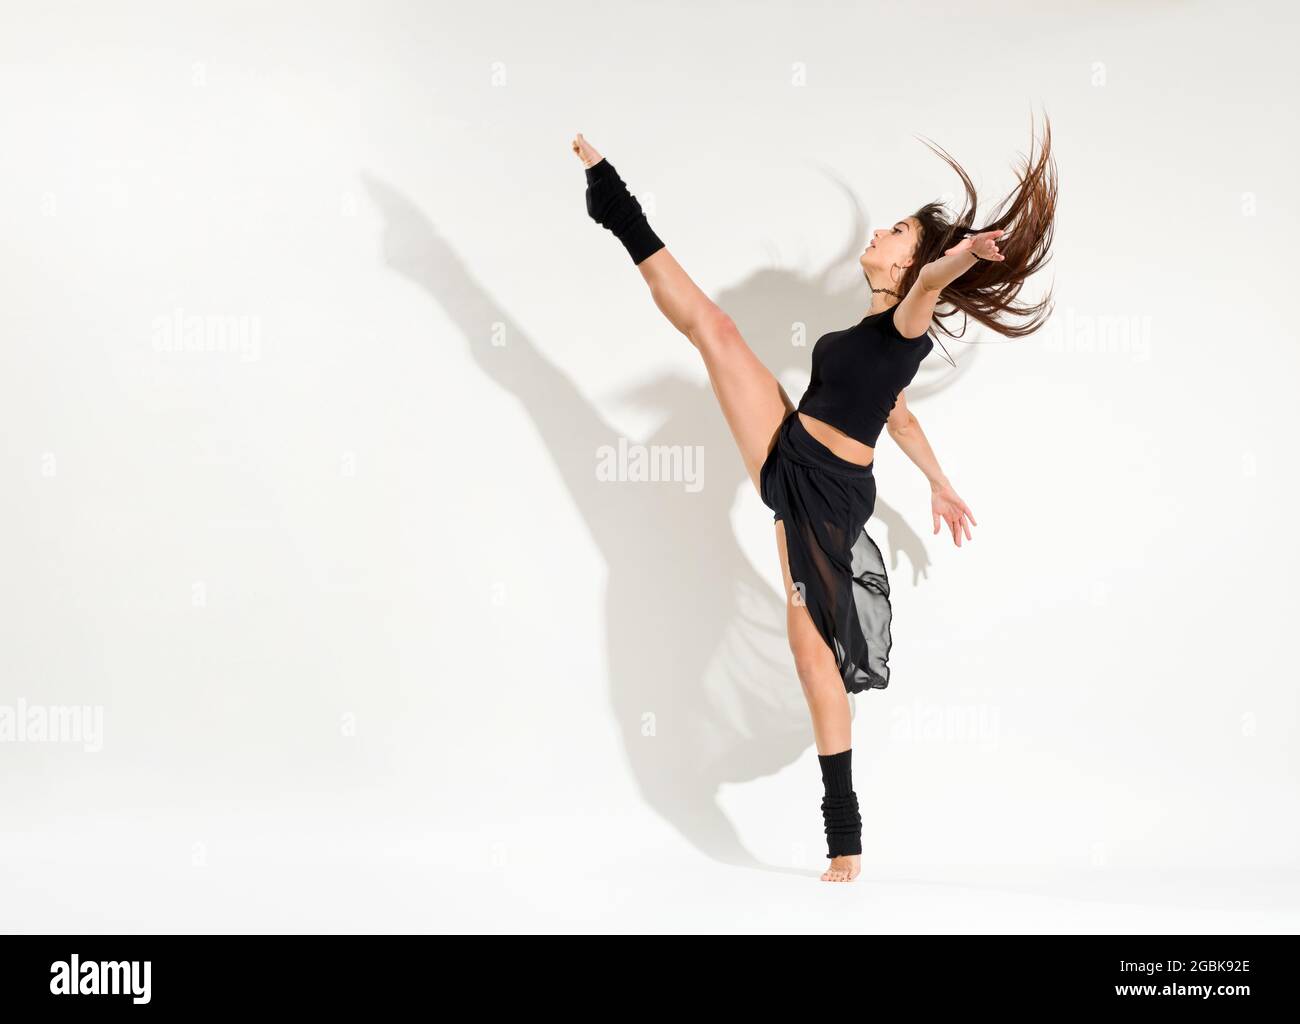 Back flex!  Fitness shoot ideas, Dynamic poses, Art poses